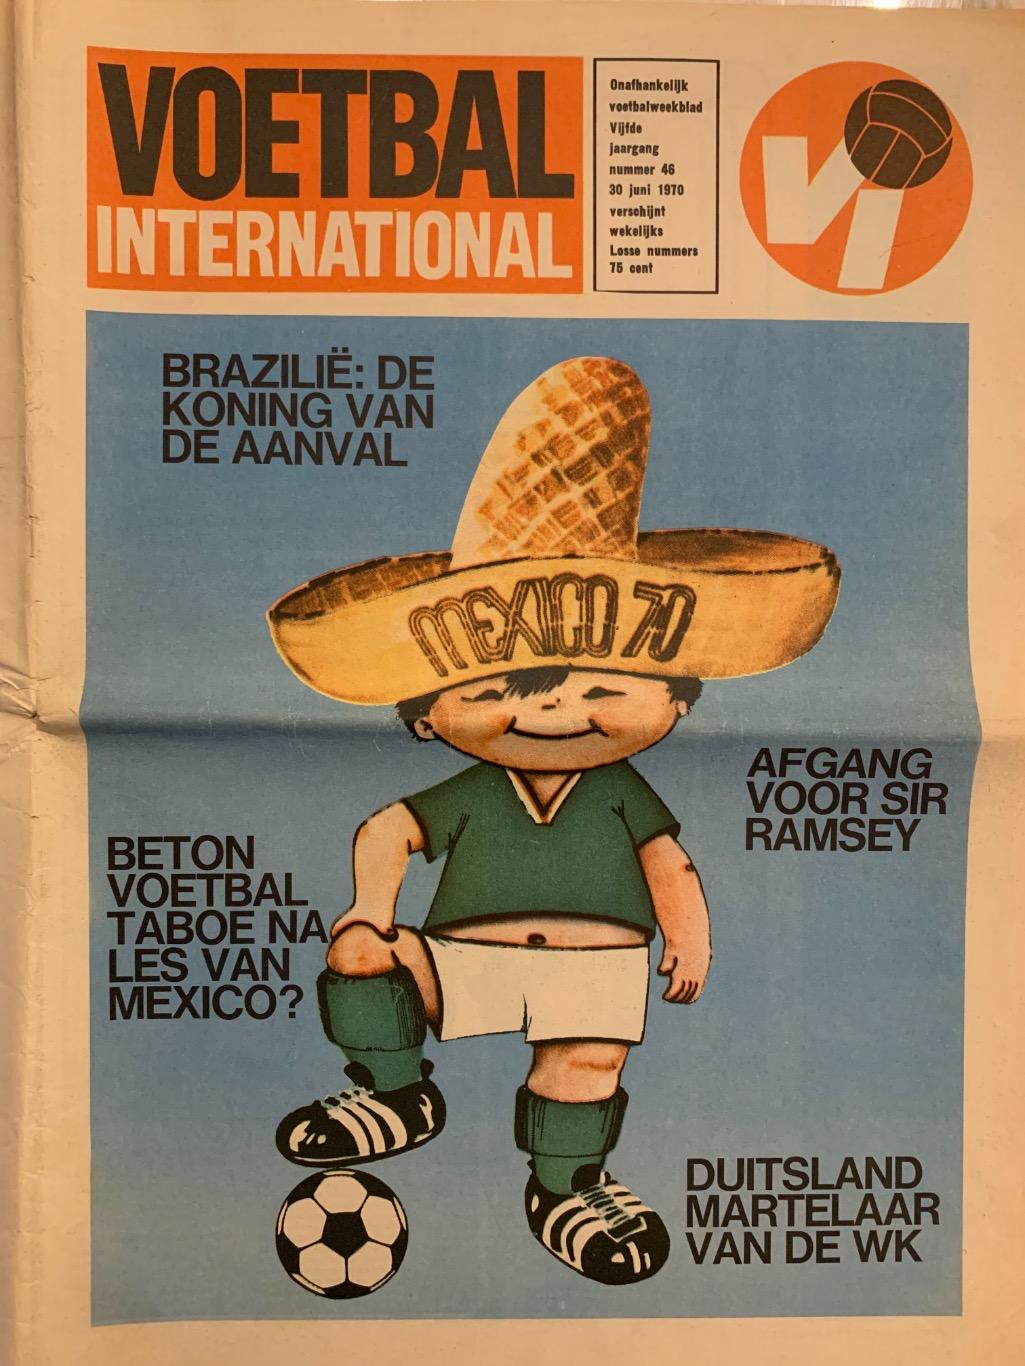 Voetbal international чемпионат мира 1970